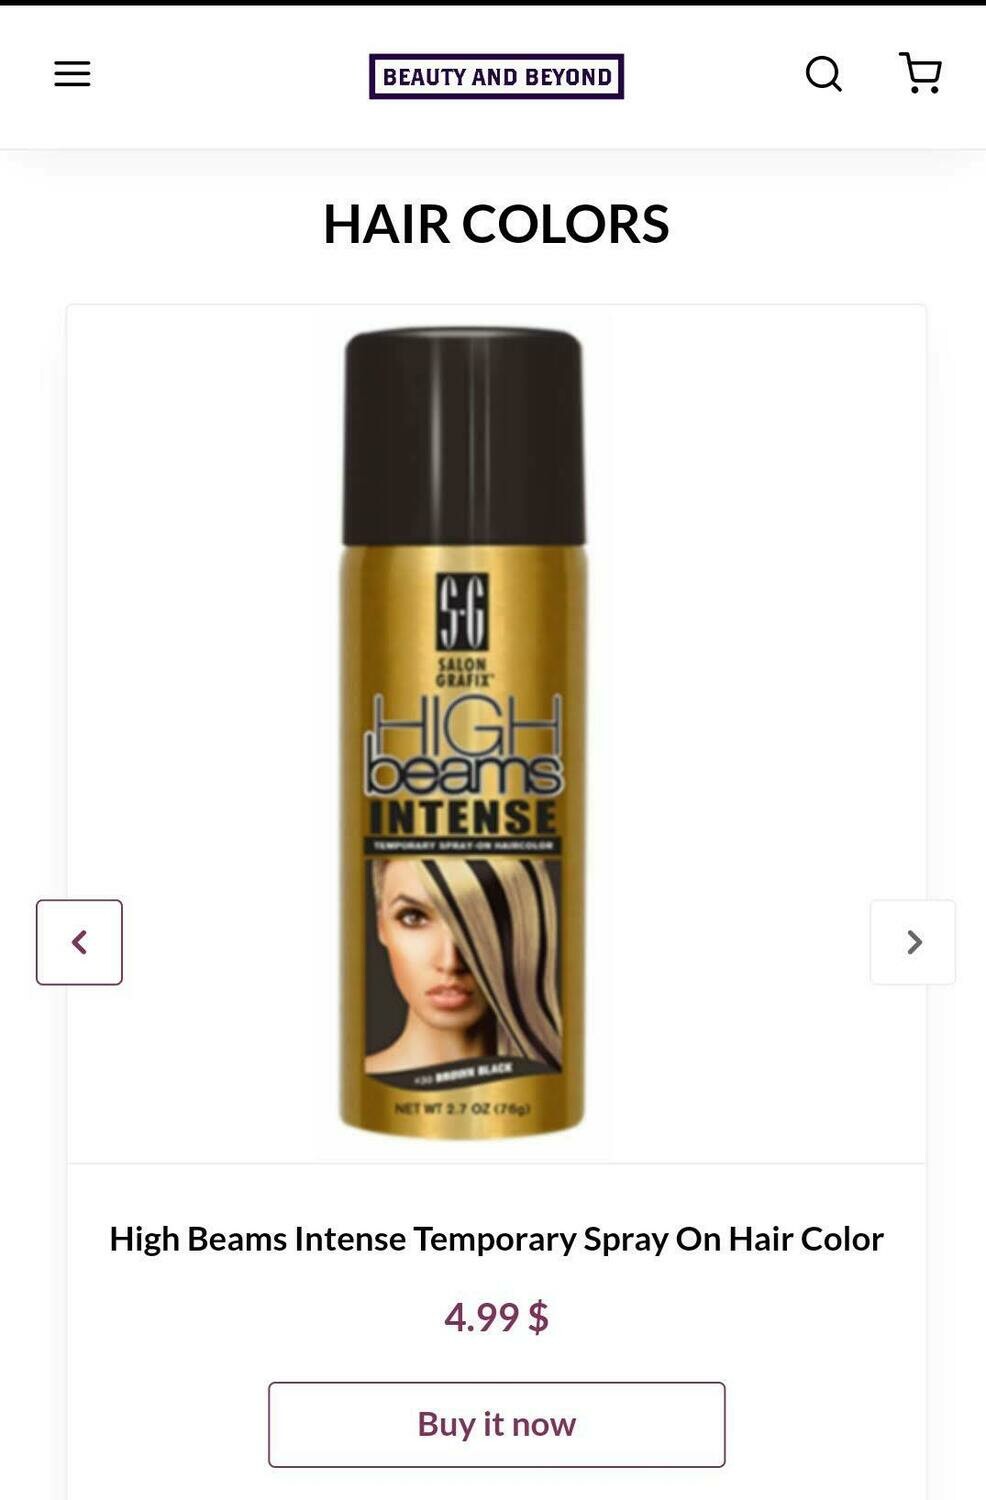 High Beams Intense Temporary Spray On Hair Color